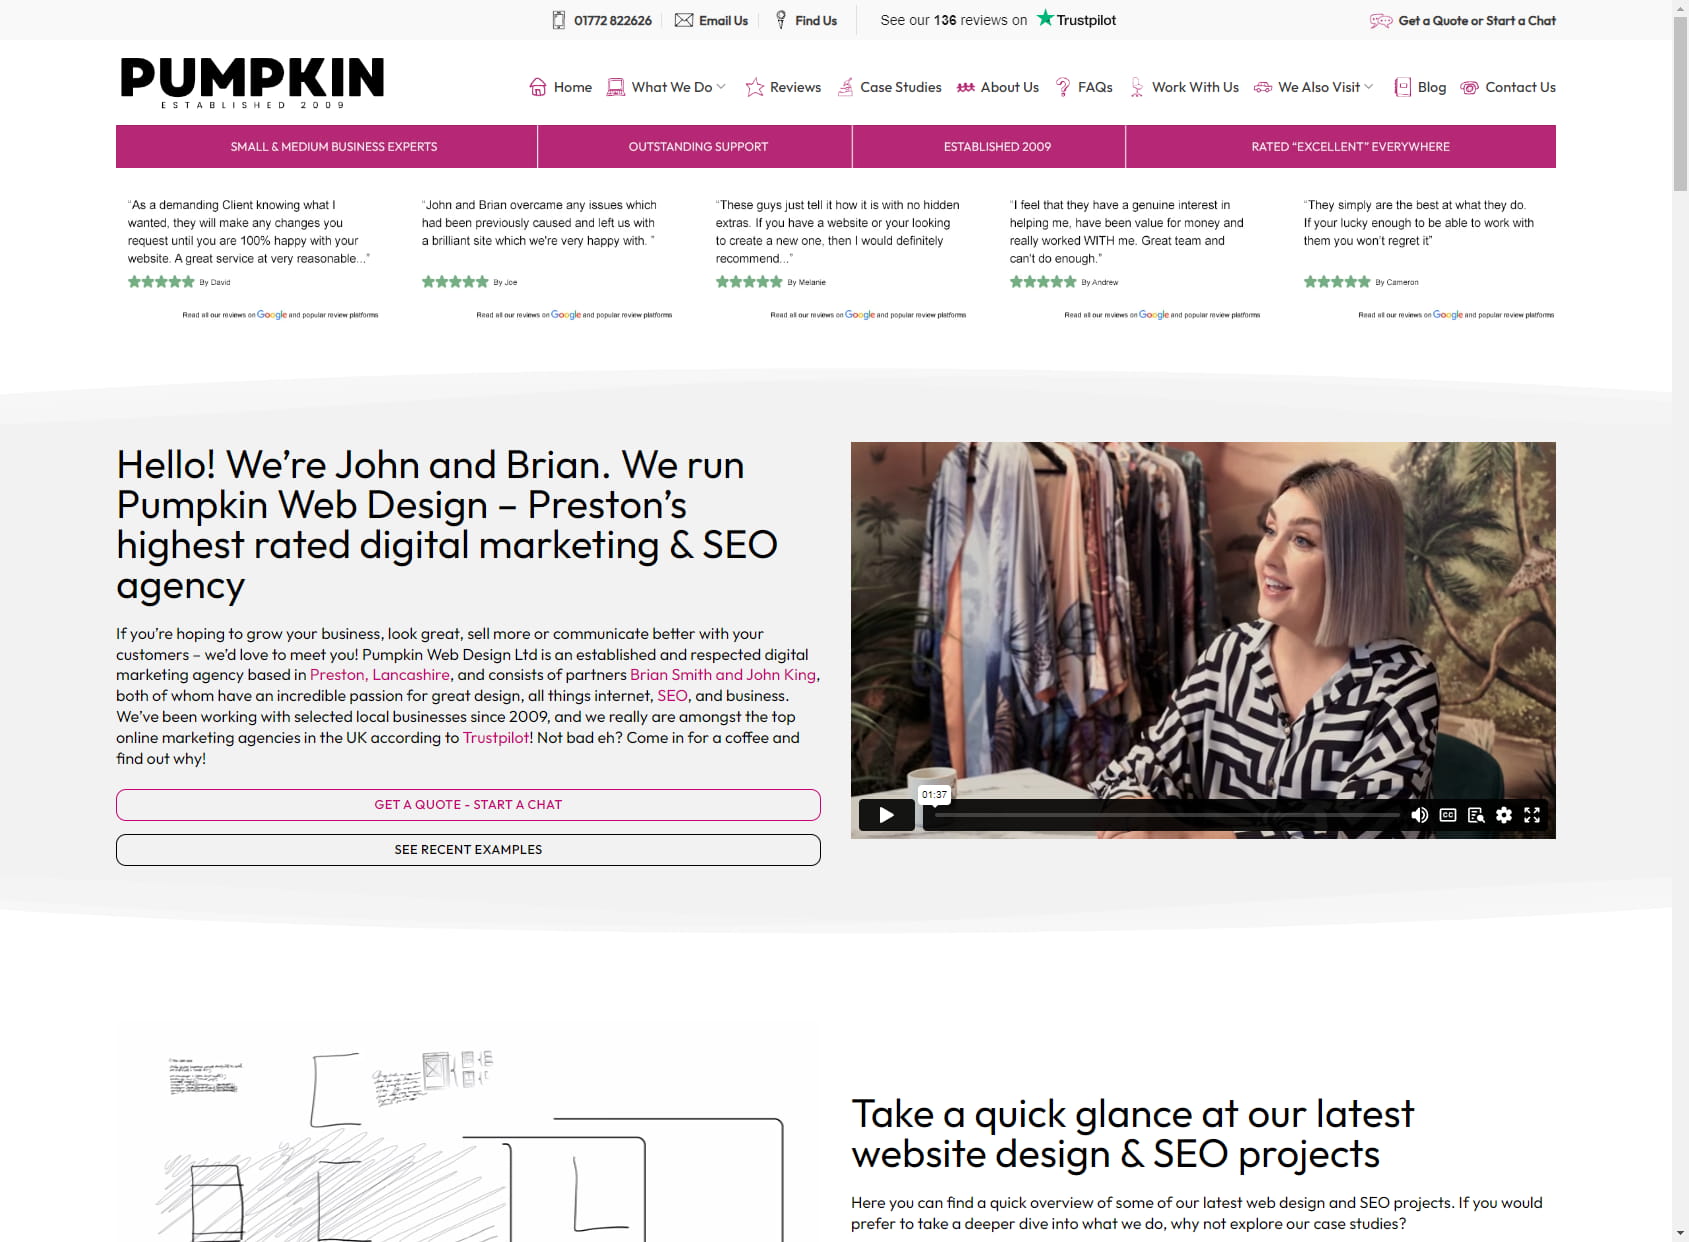 Pumpkin Web Design Ltd